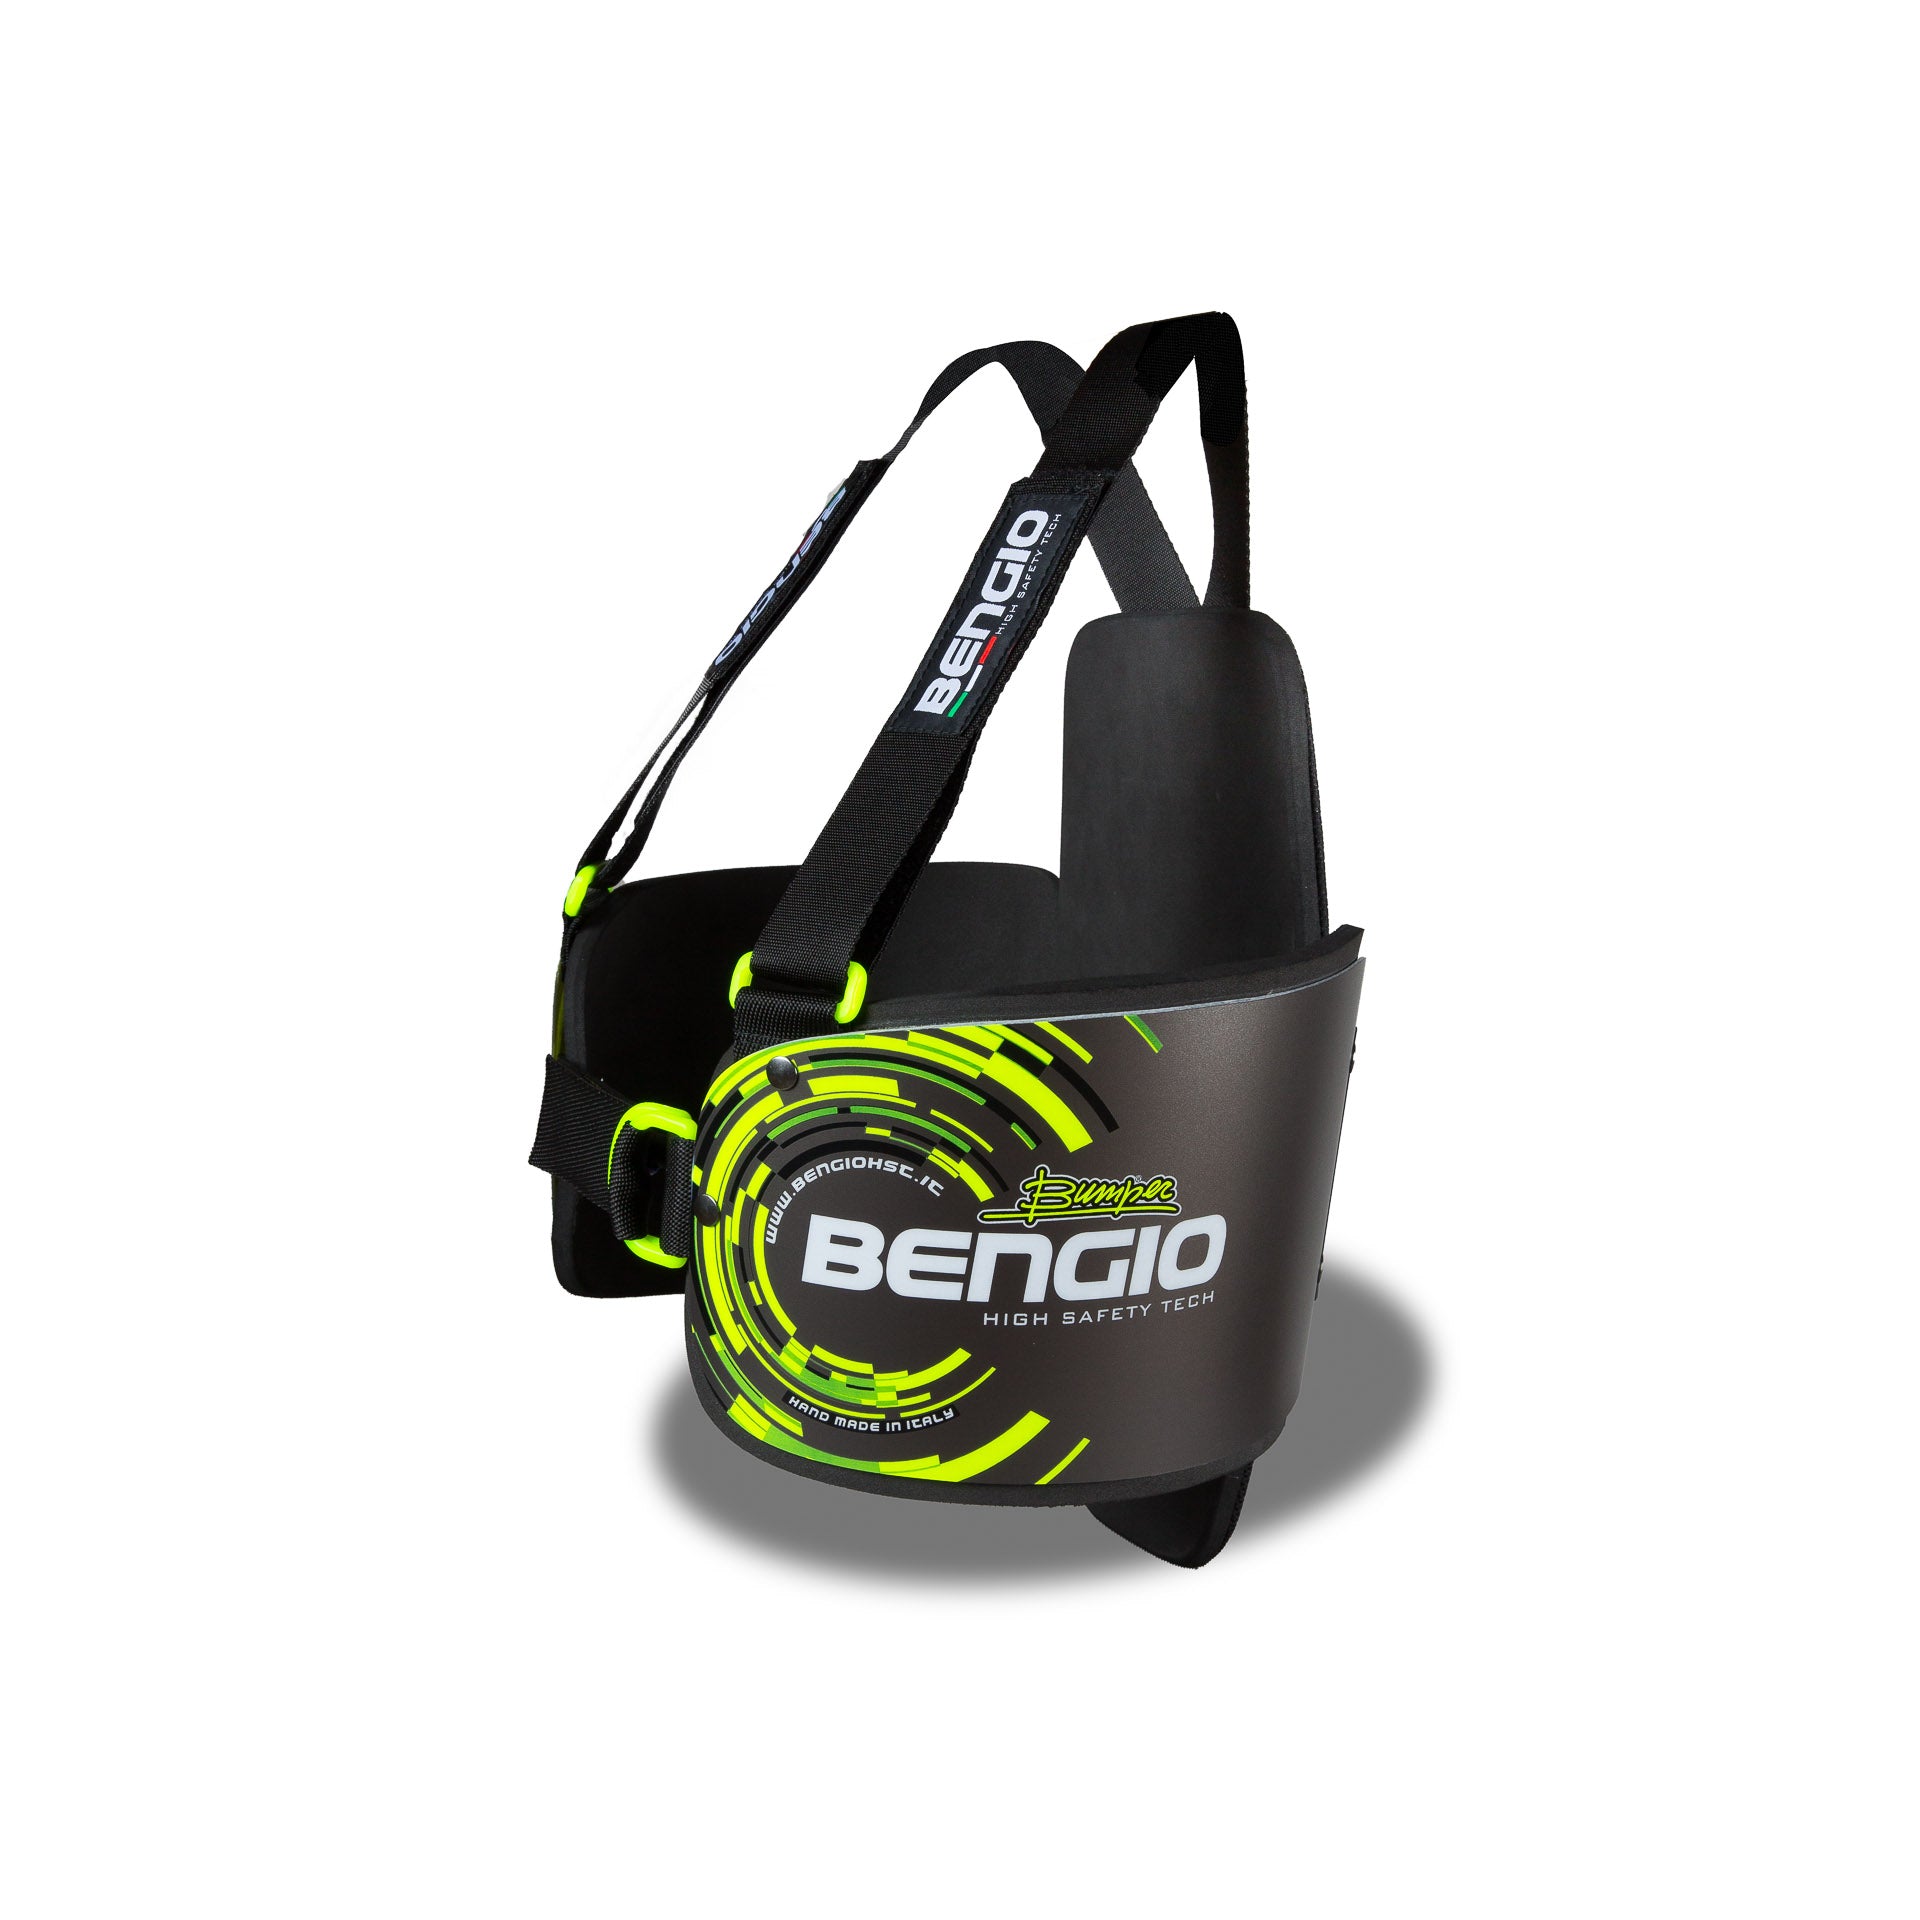 BENGIO STDPLLGY BUMPER Plus Захист ребер для картингу, сірий/флюор. жовтий, розмір L Photo-1 